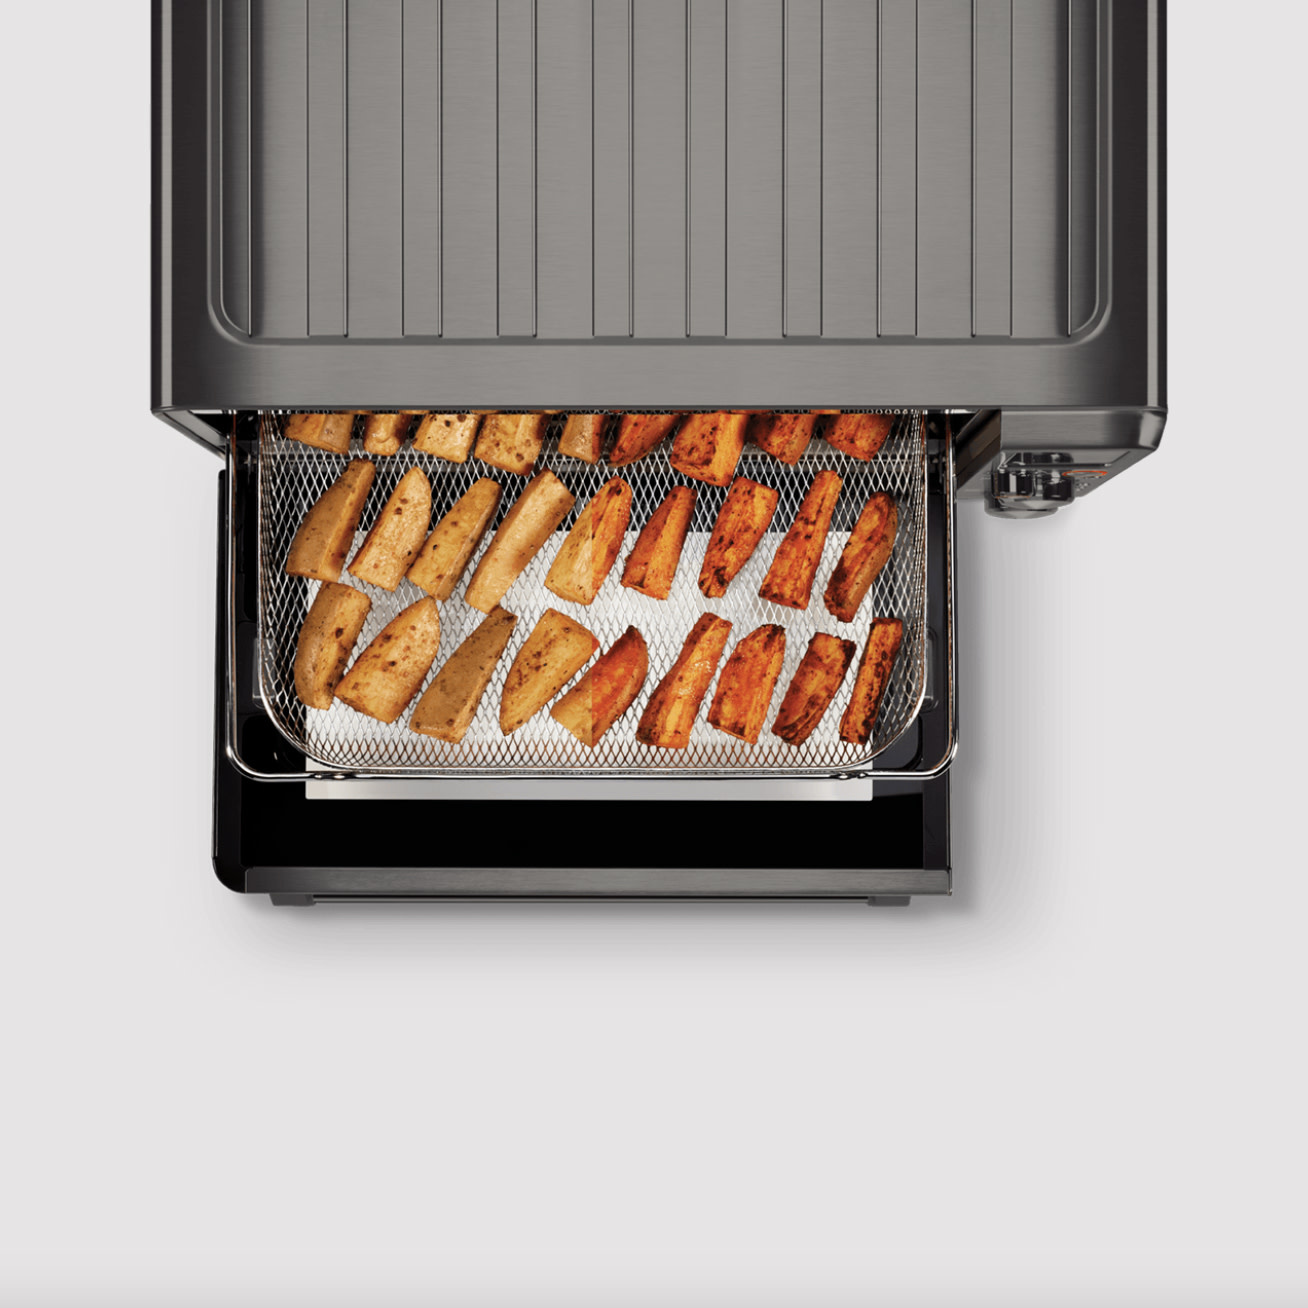 Breville Joule® Oven Air Fryer Pro - King Arthur Baking Company